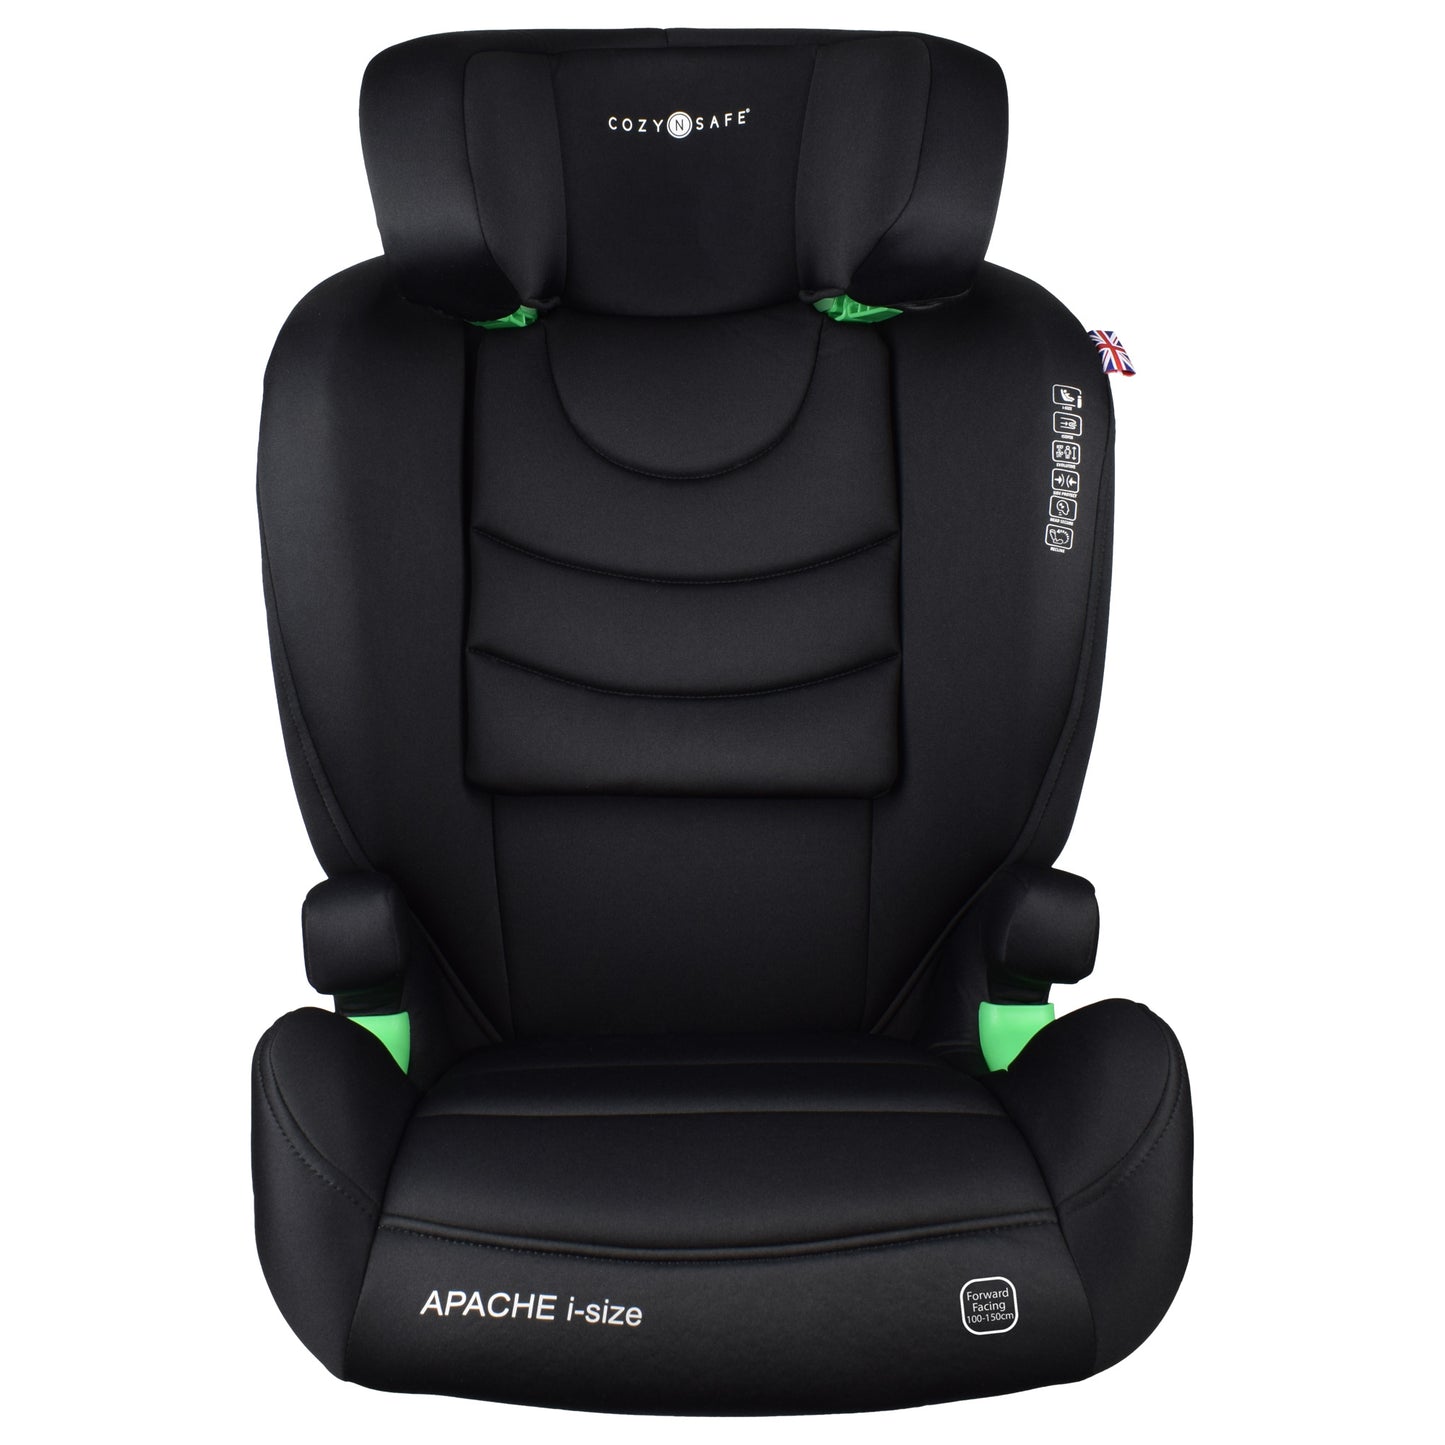 The Cozy N Safe Apache i-Size 100-150cm Car Seat